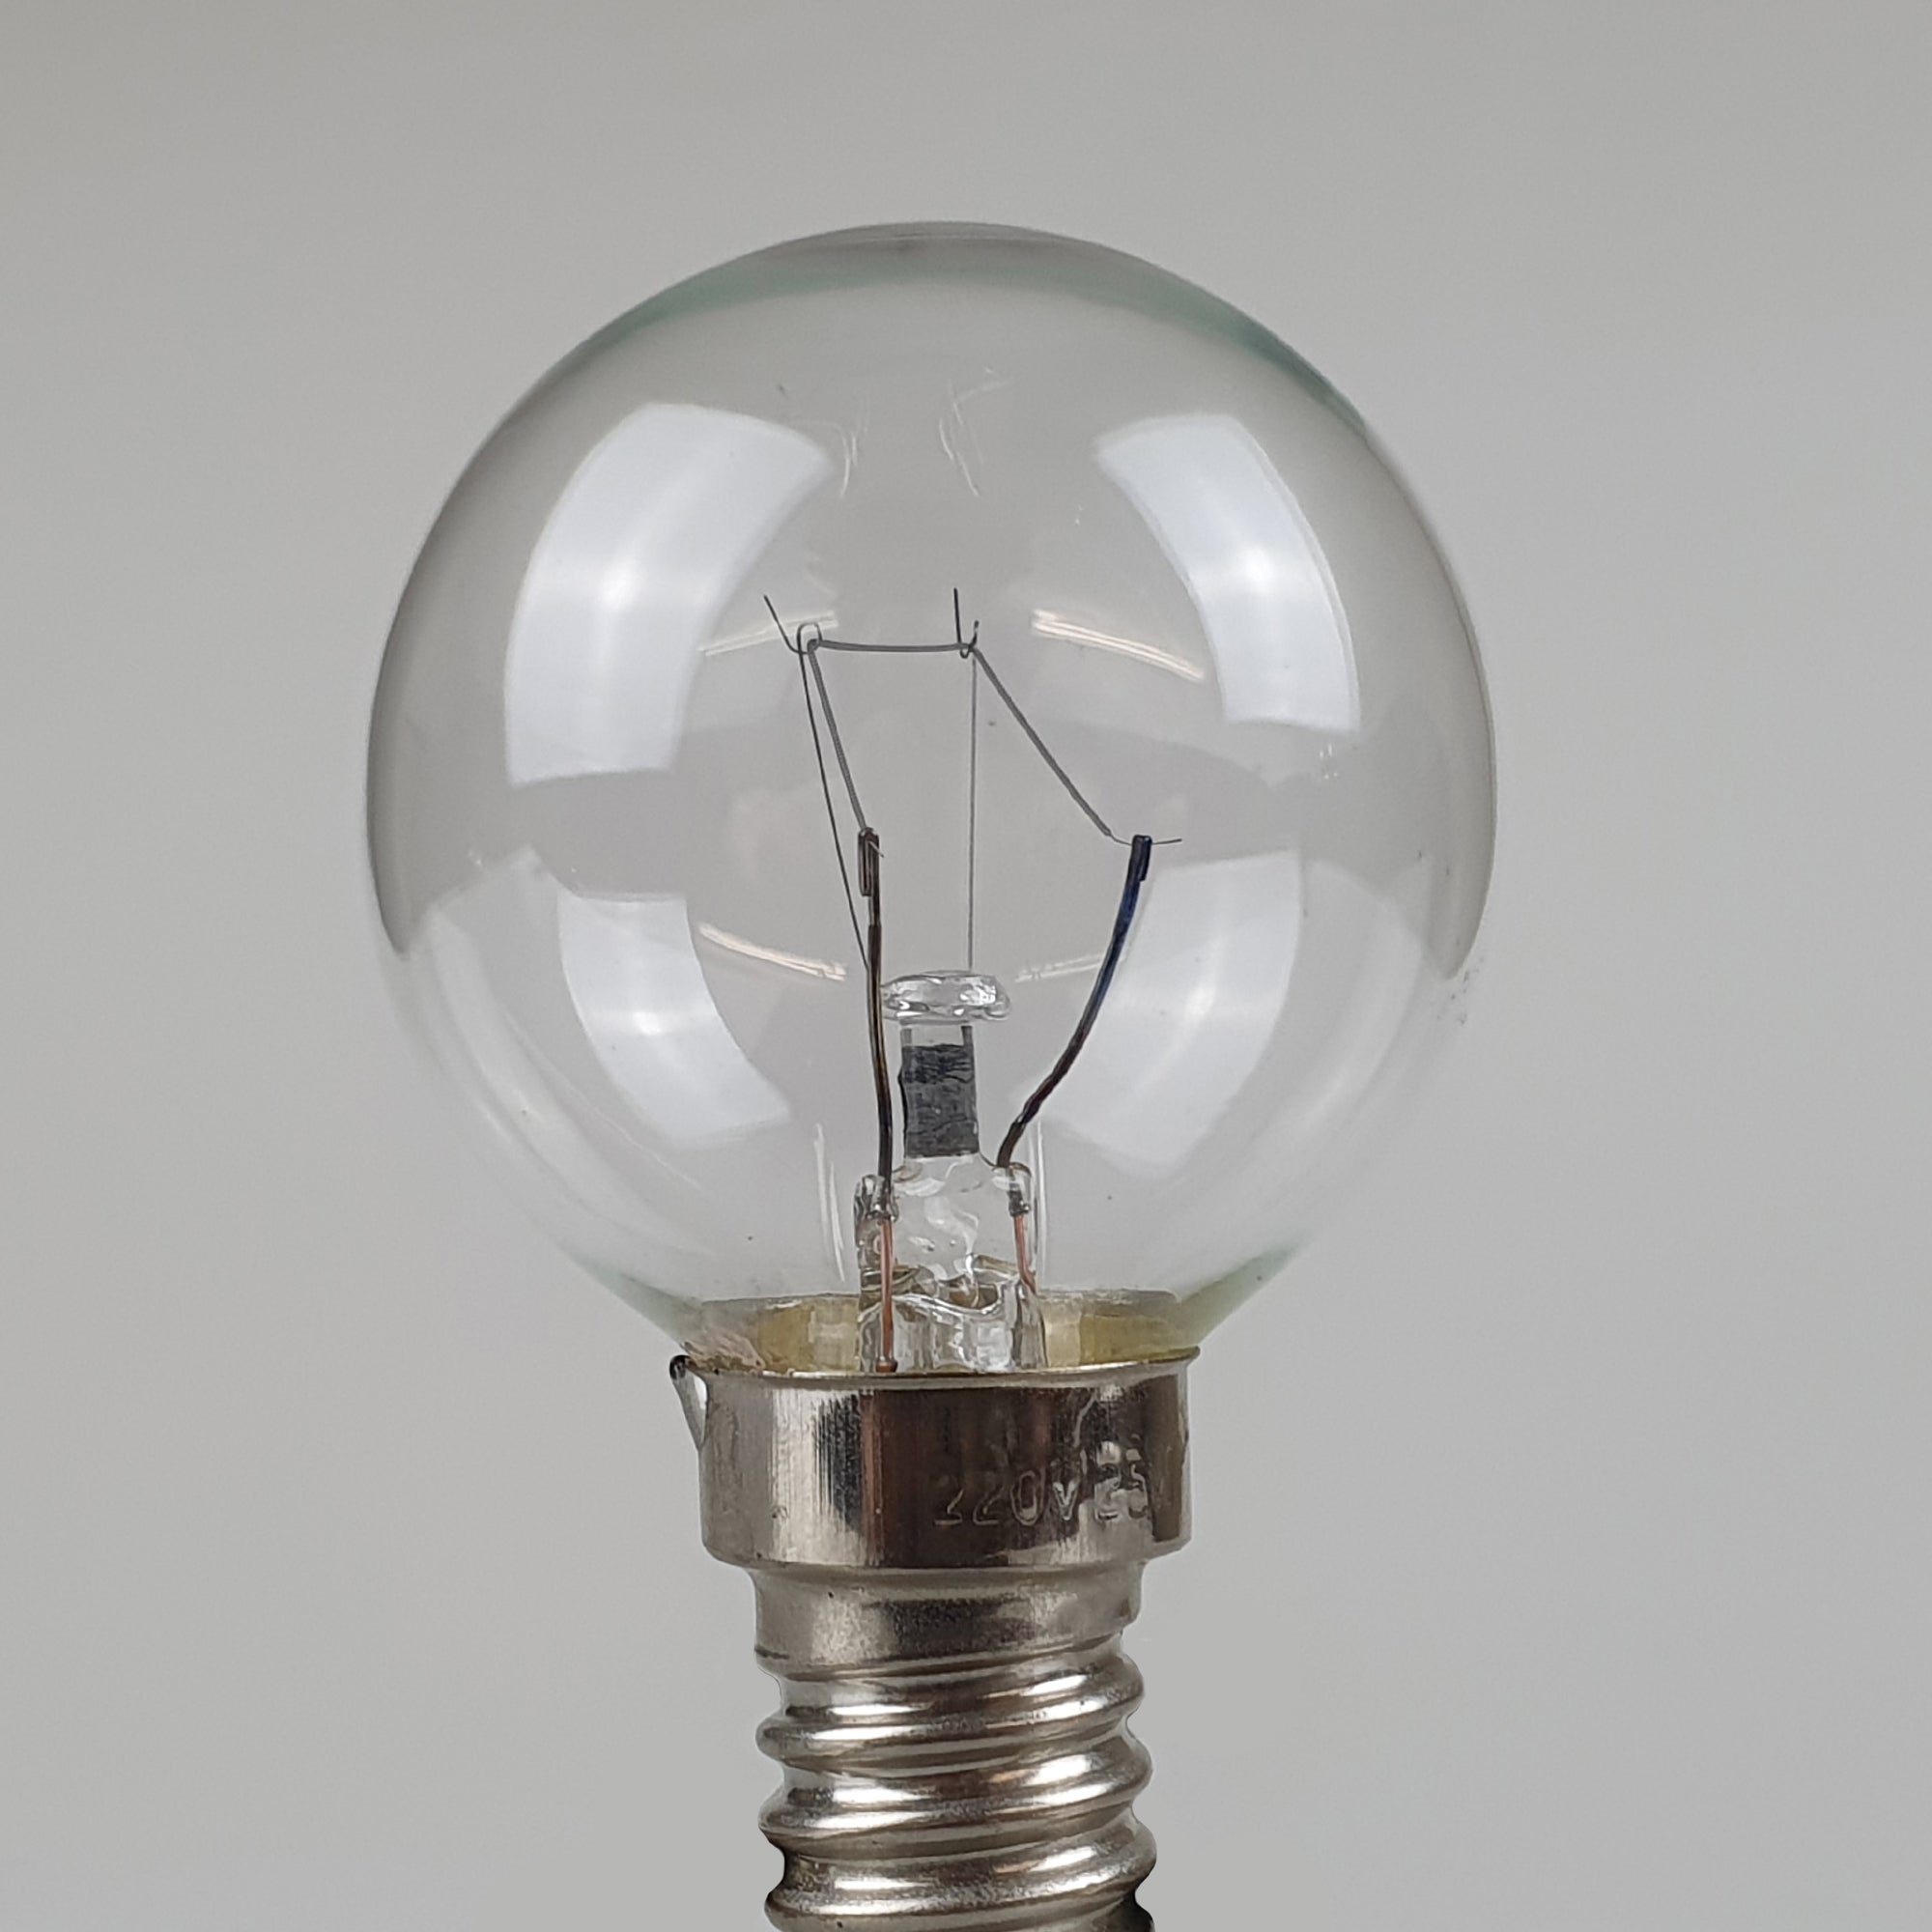 Replacement Bulb - E14 25W